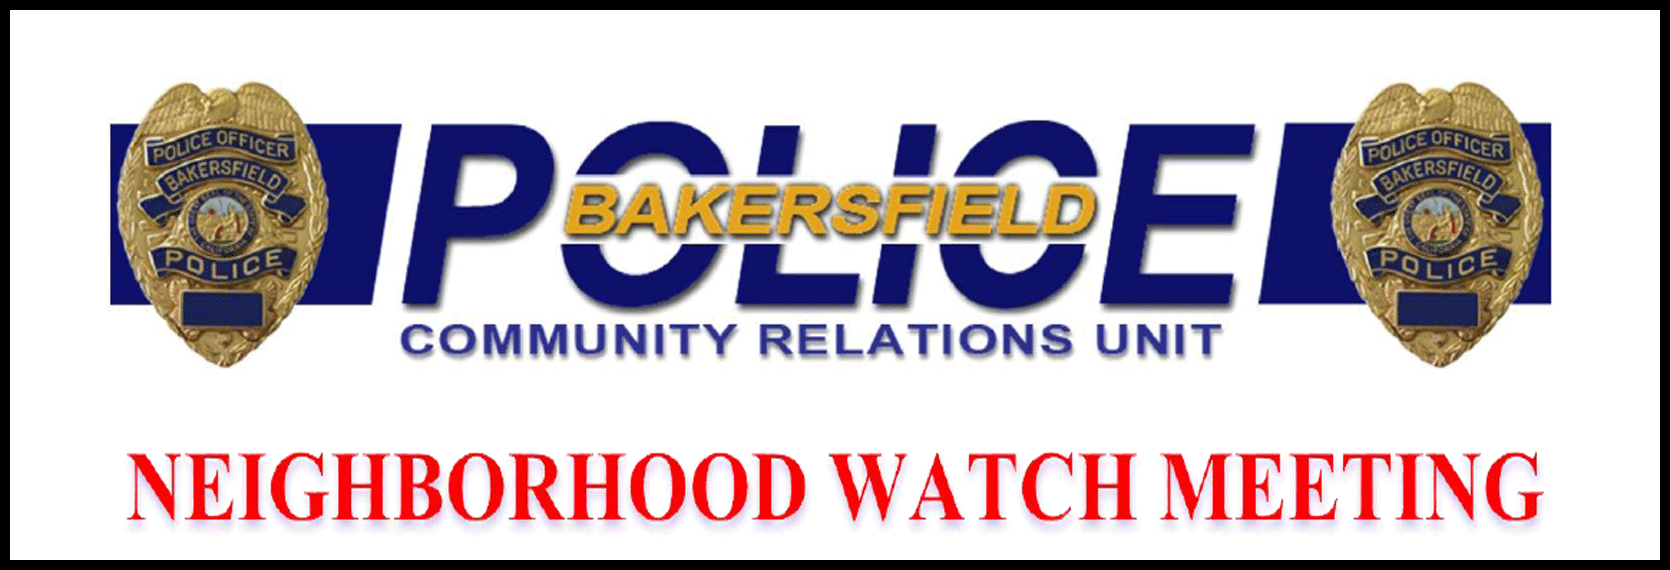 Bakersfield Police Department announces their upcoming Neighborhood Watch Meeting